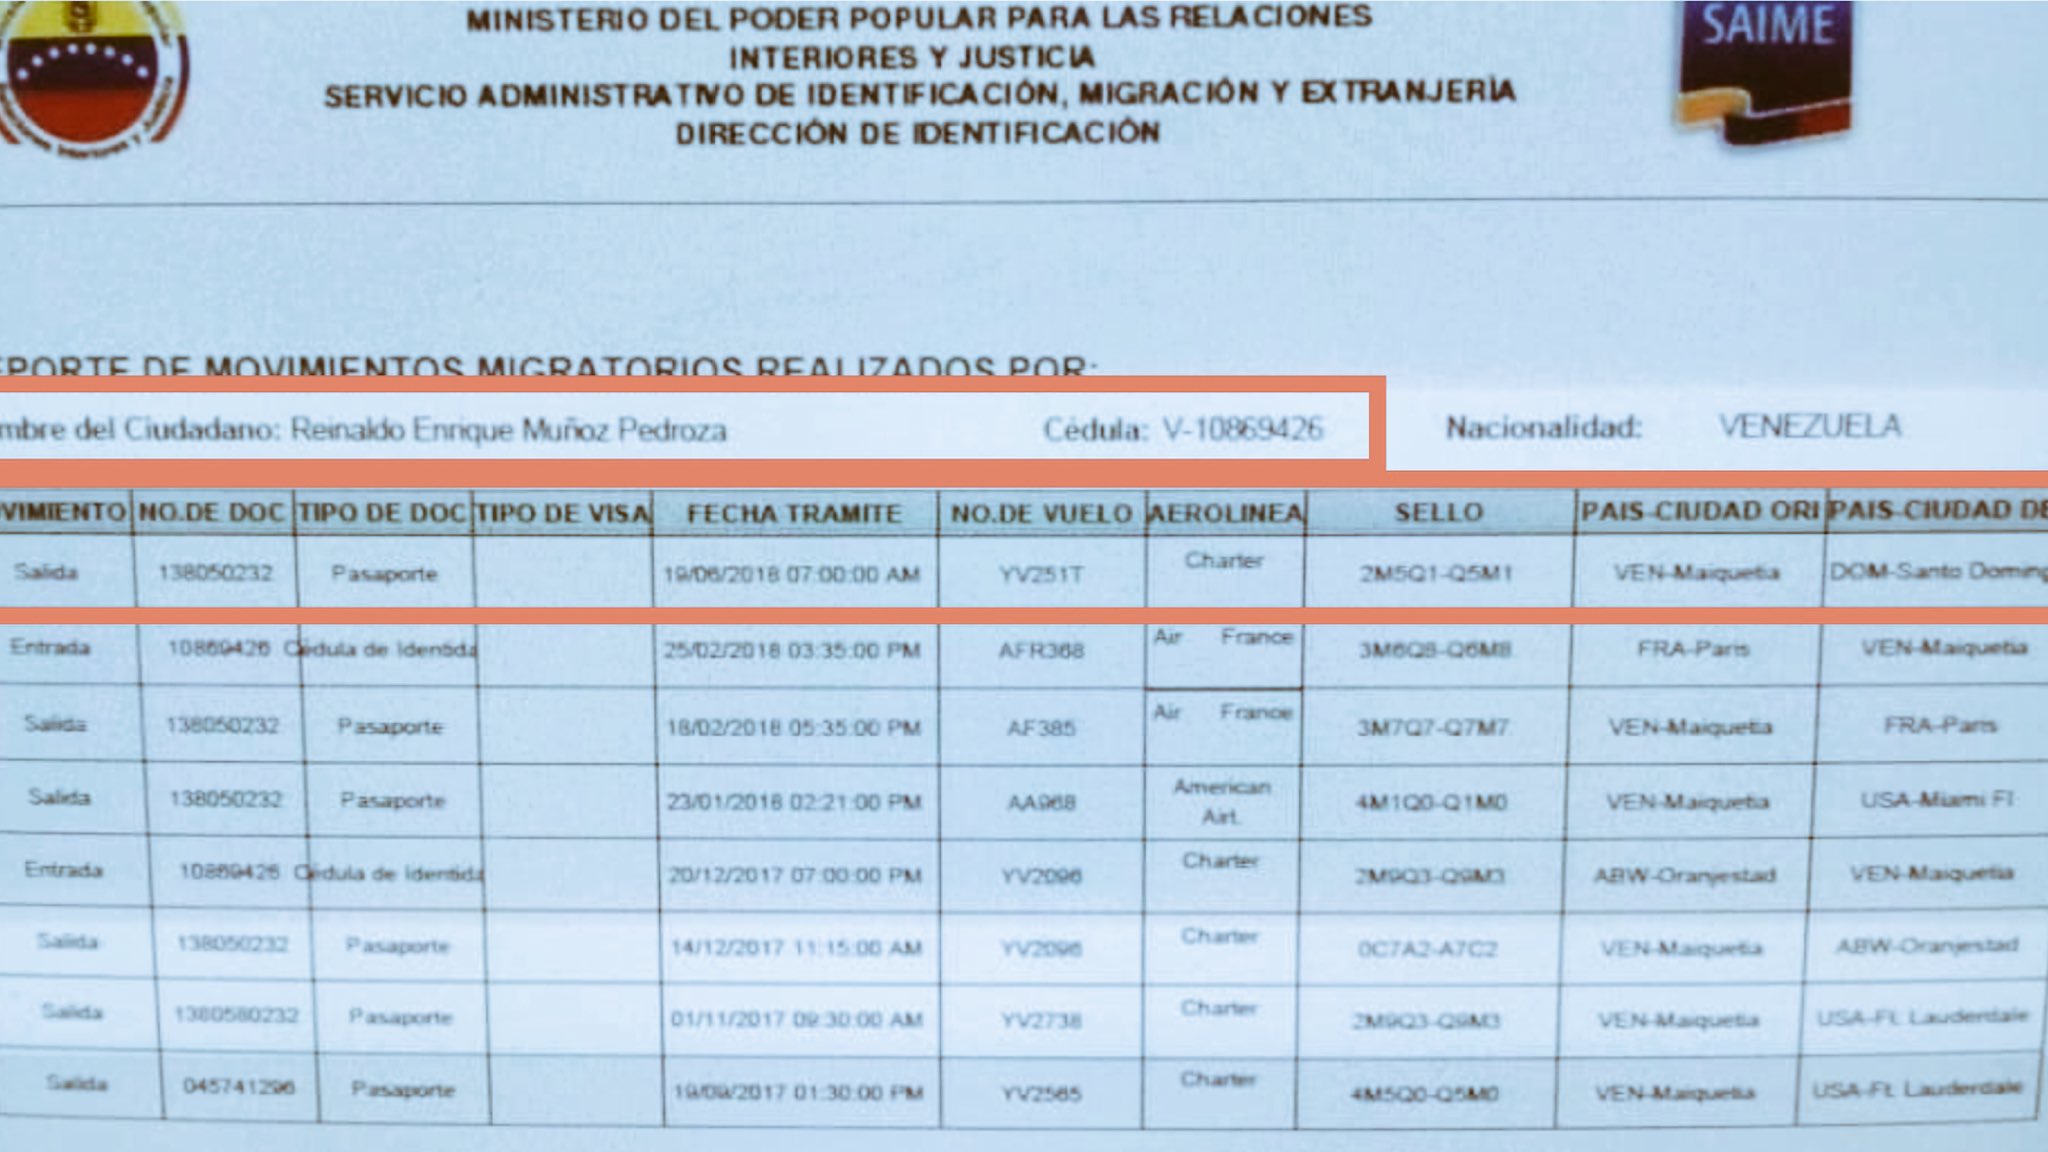 Venezuela's Attorney General Reinaldo Muñoz recent travel log